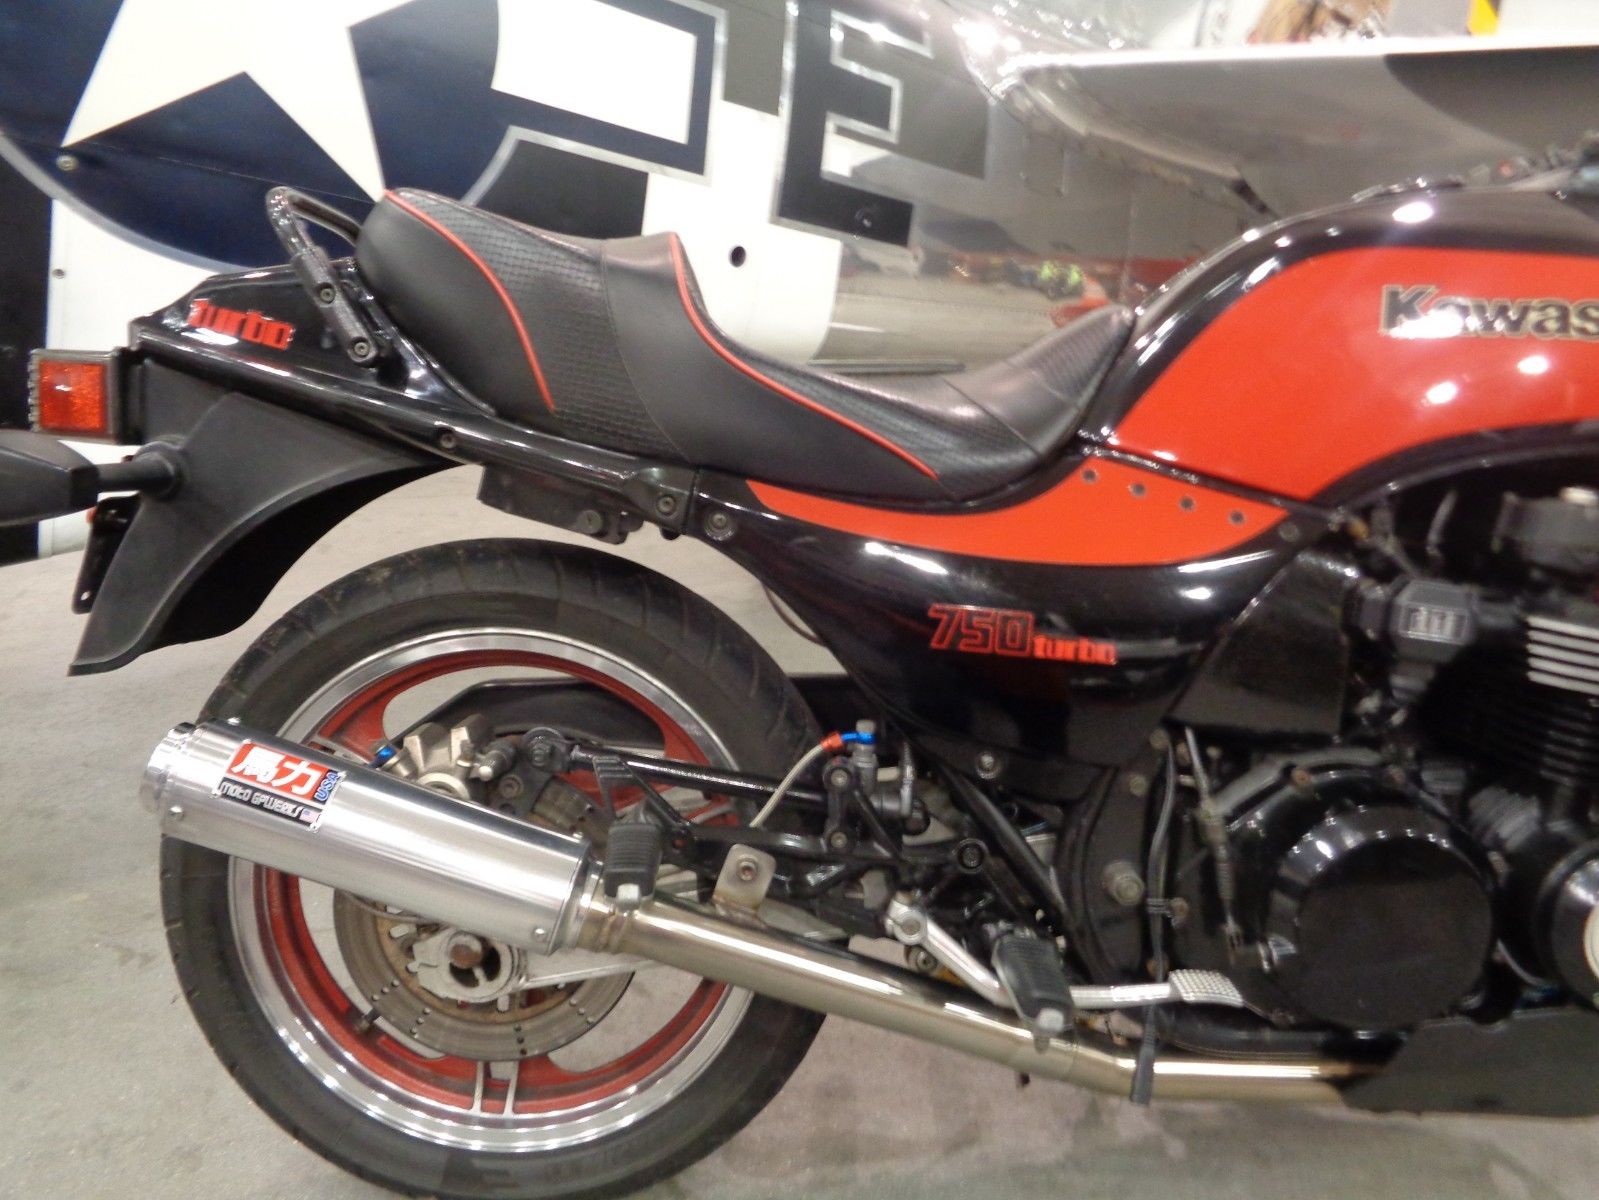 Customized 1984 Kawasaki Makes 180 Horsepower -